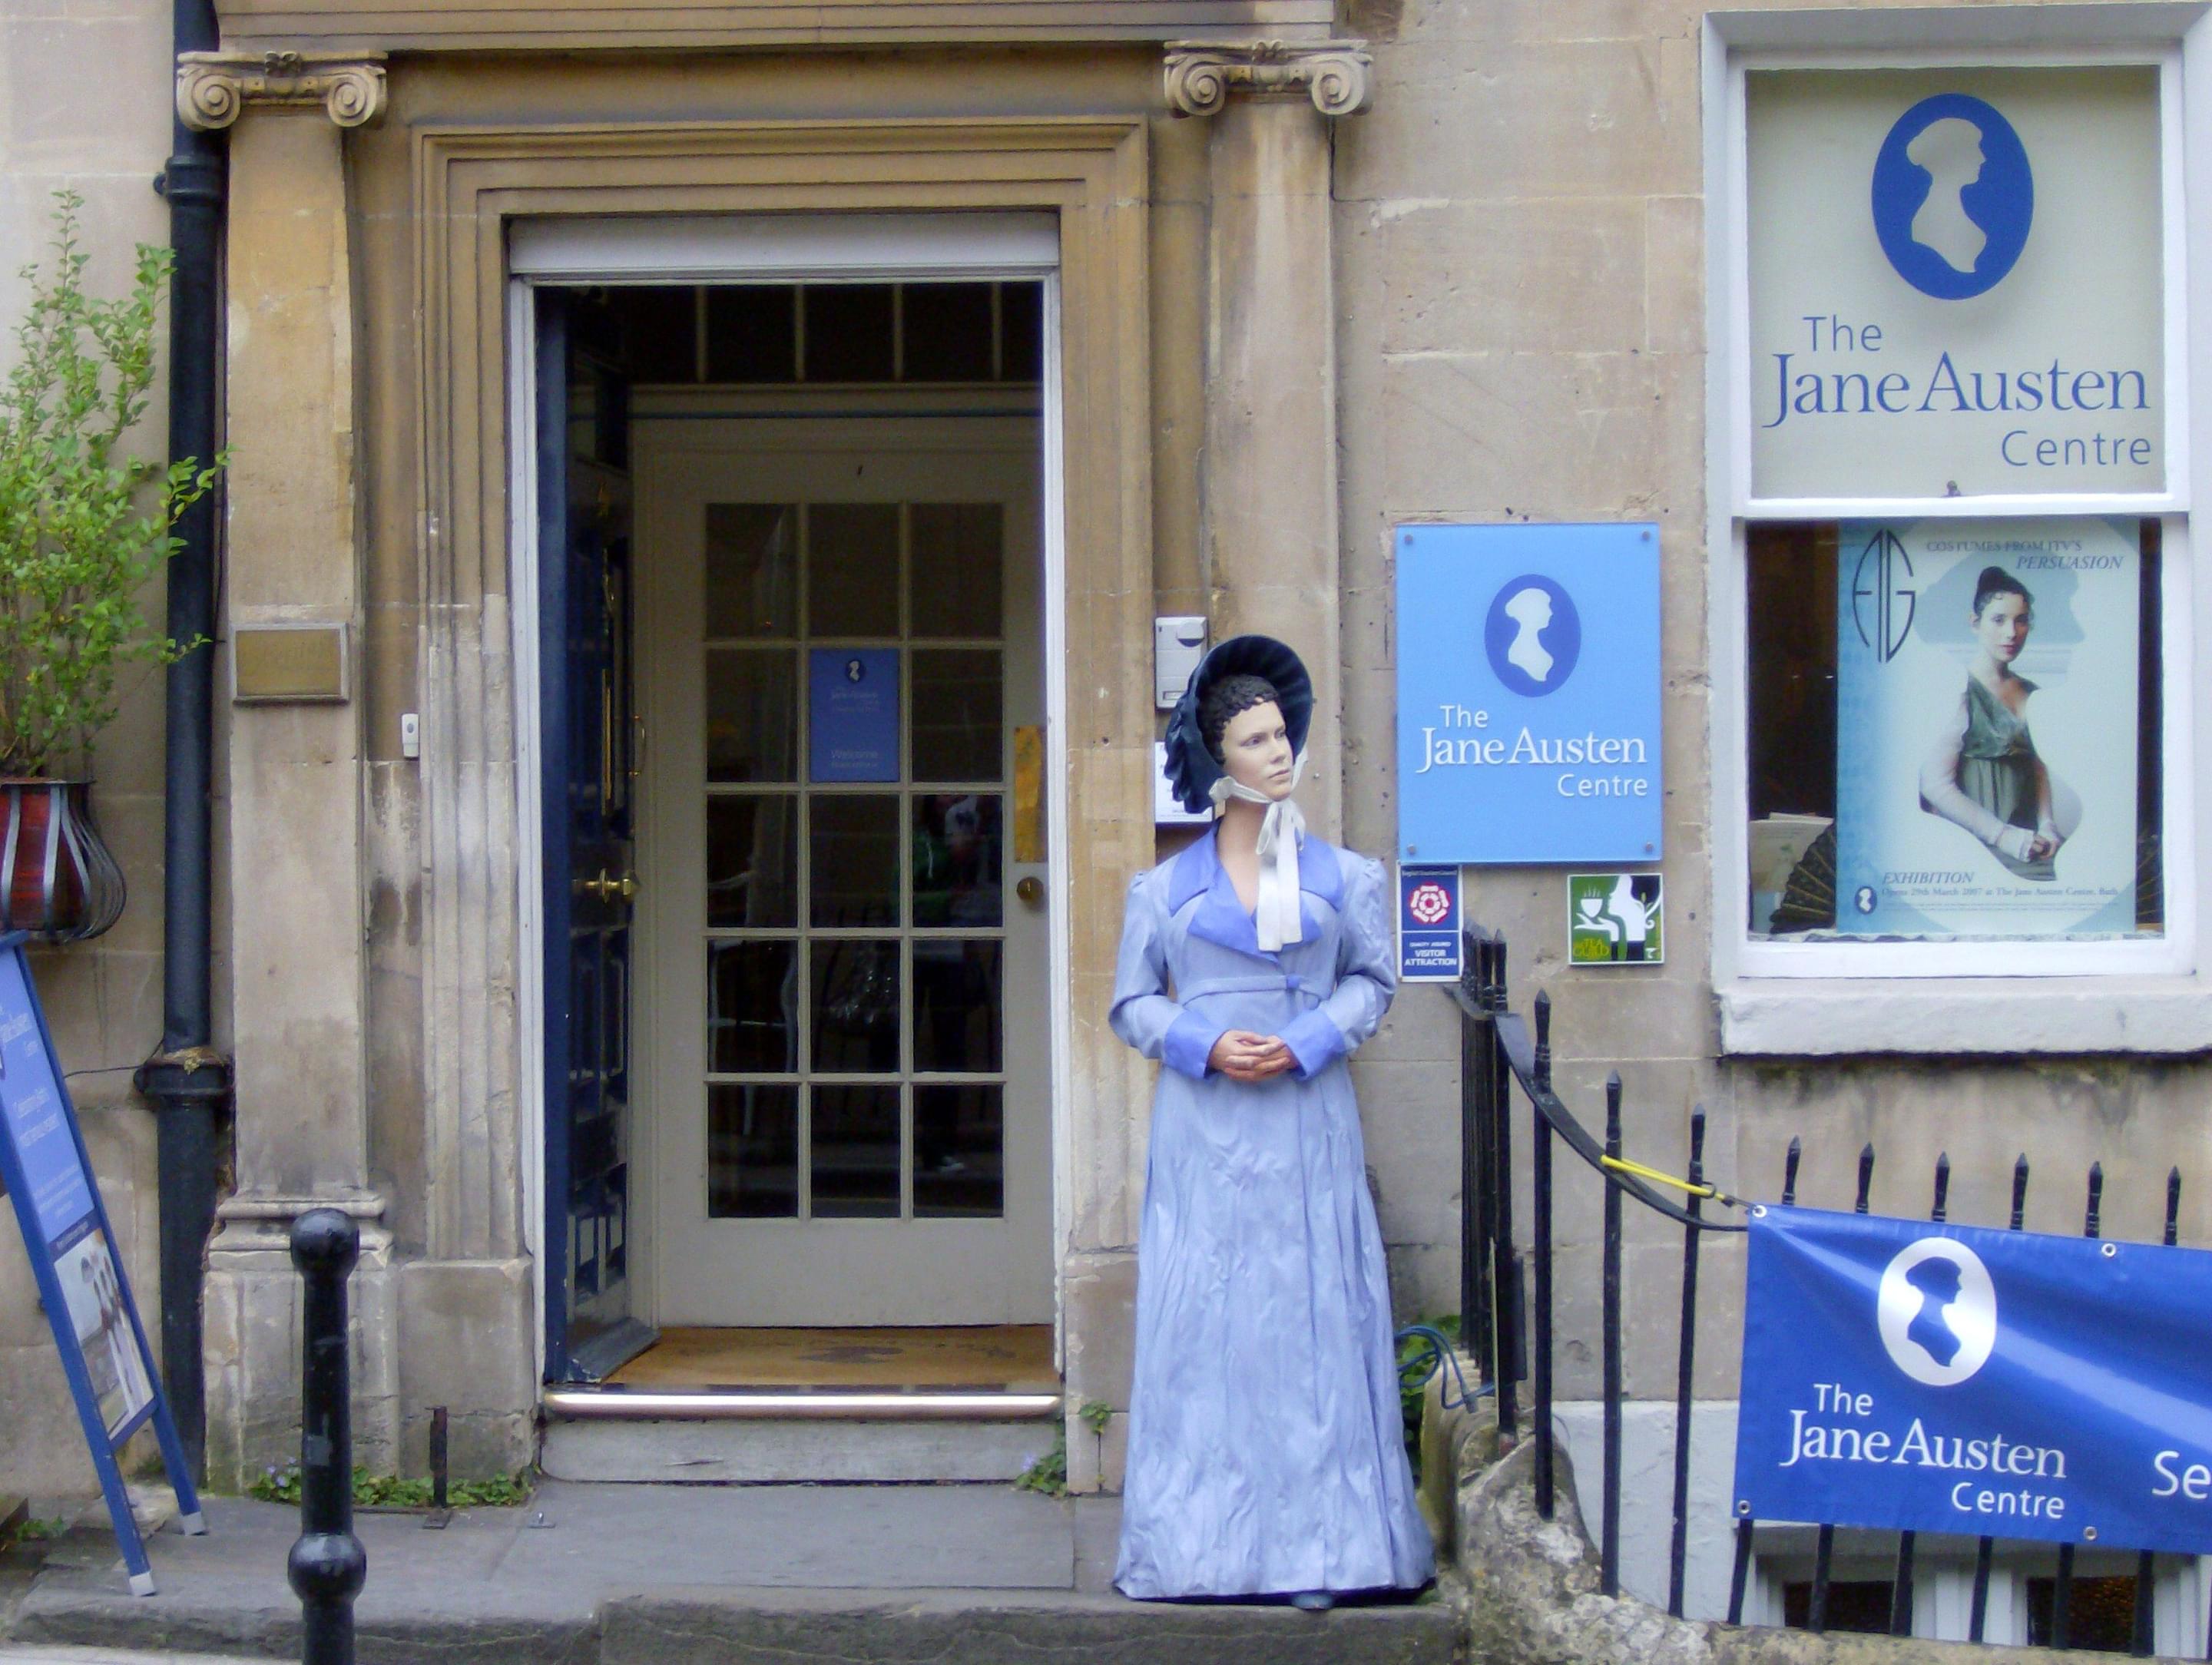 The Jane Austen Centre Overview